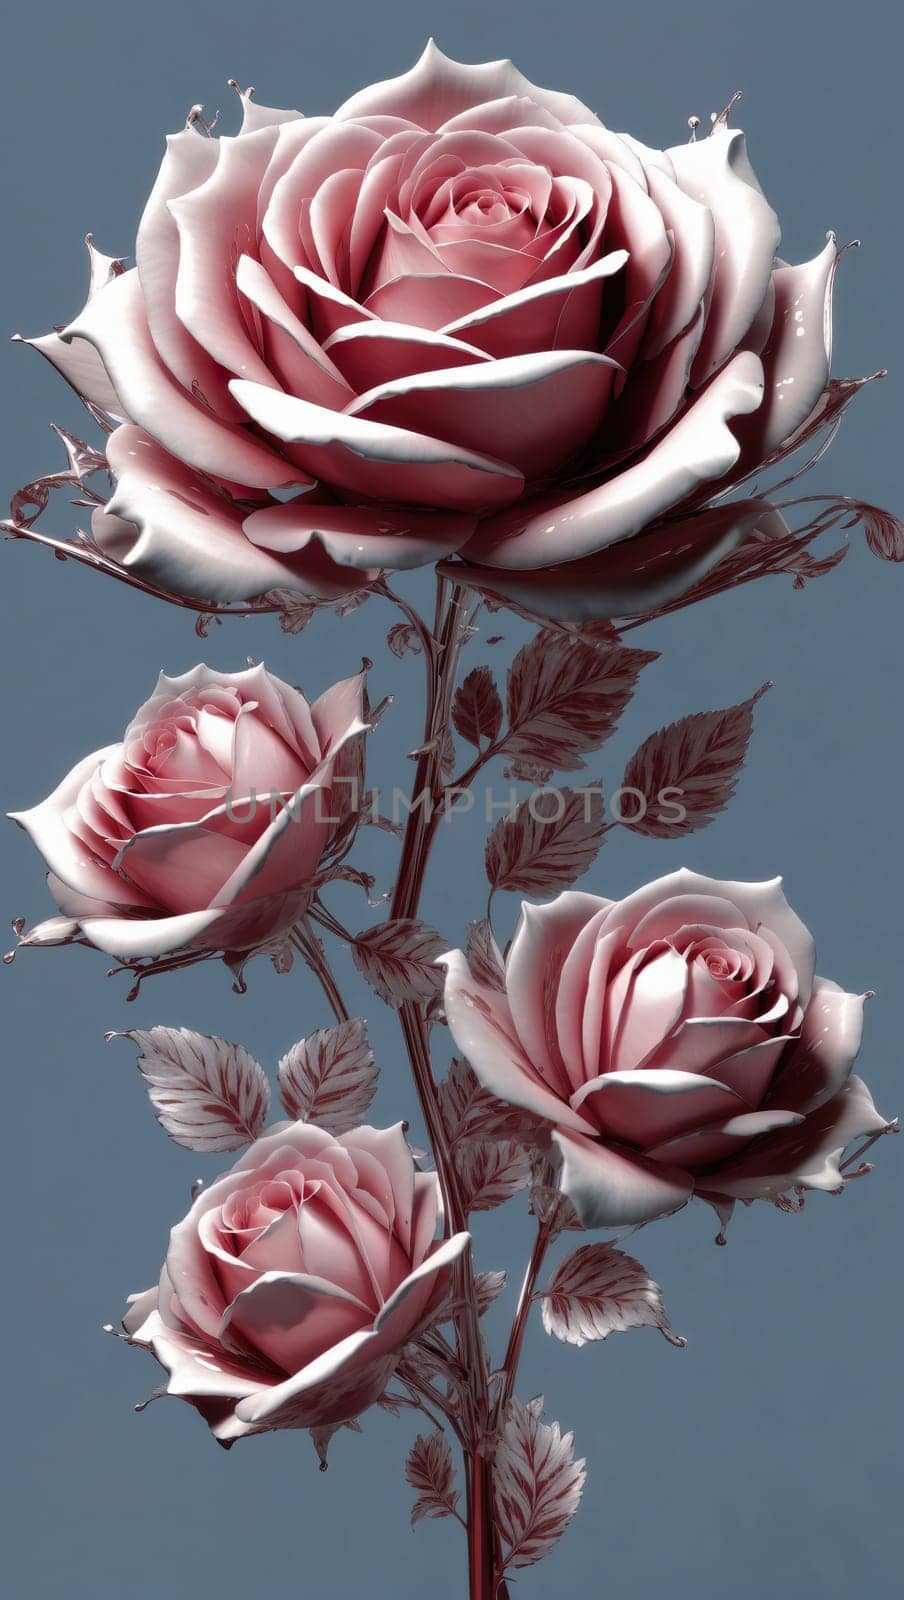 Porcelain sweet rose by applesstock